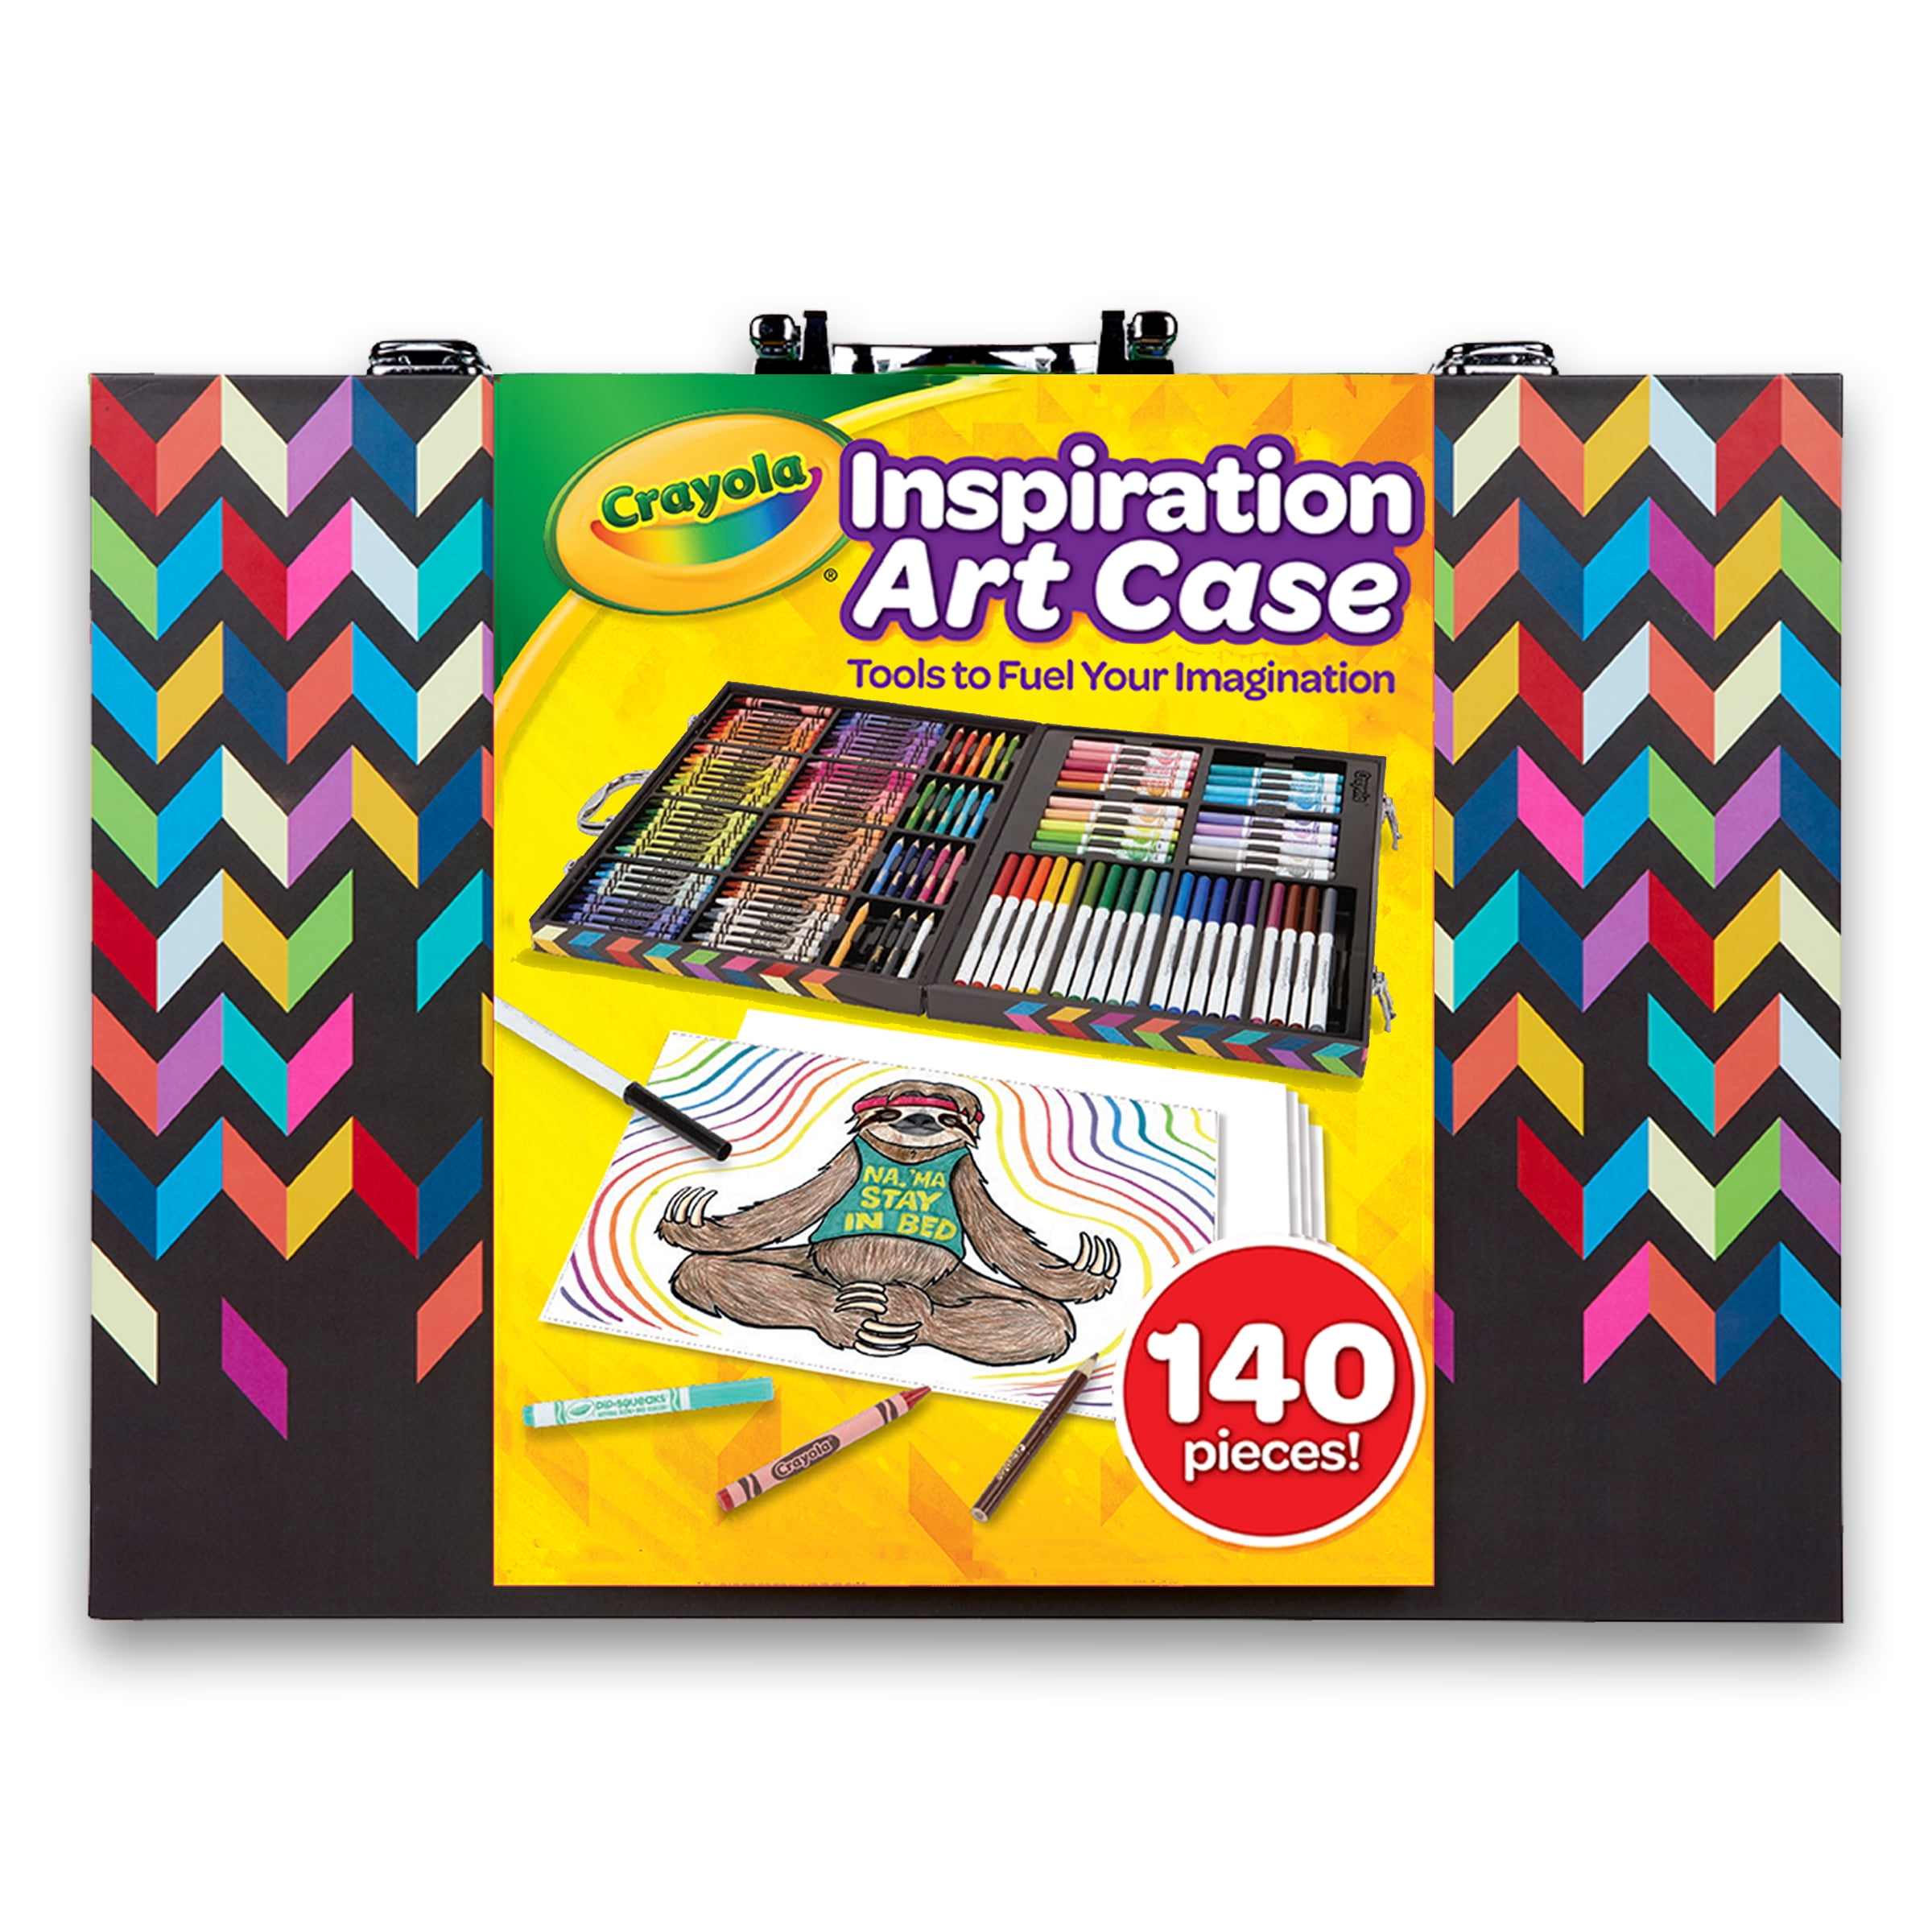 Crayola Inspiration Art Case Coloring Set 115 Pieces Art Set for Kids 